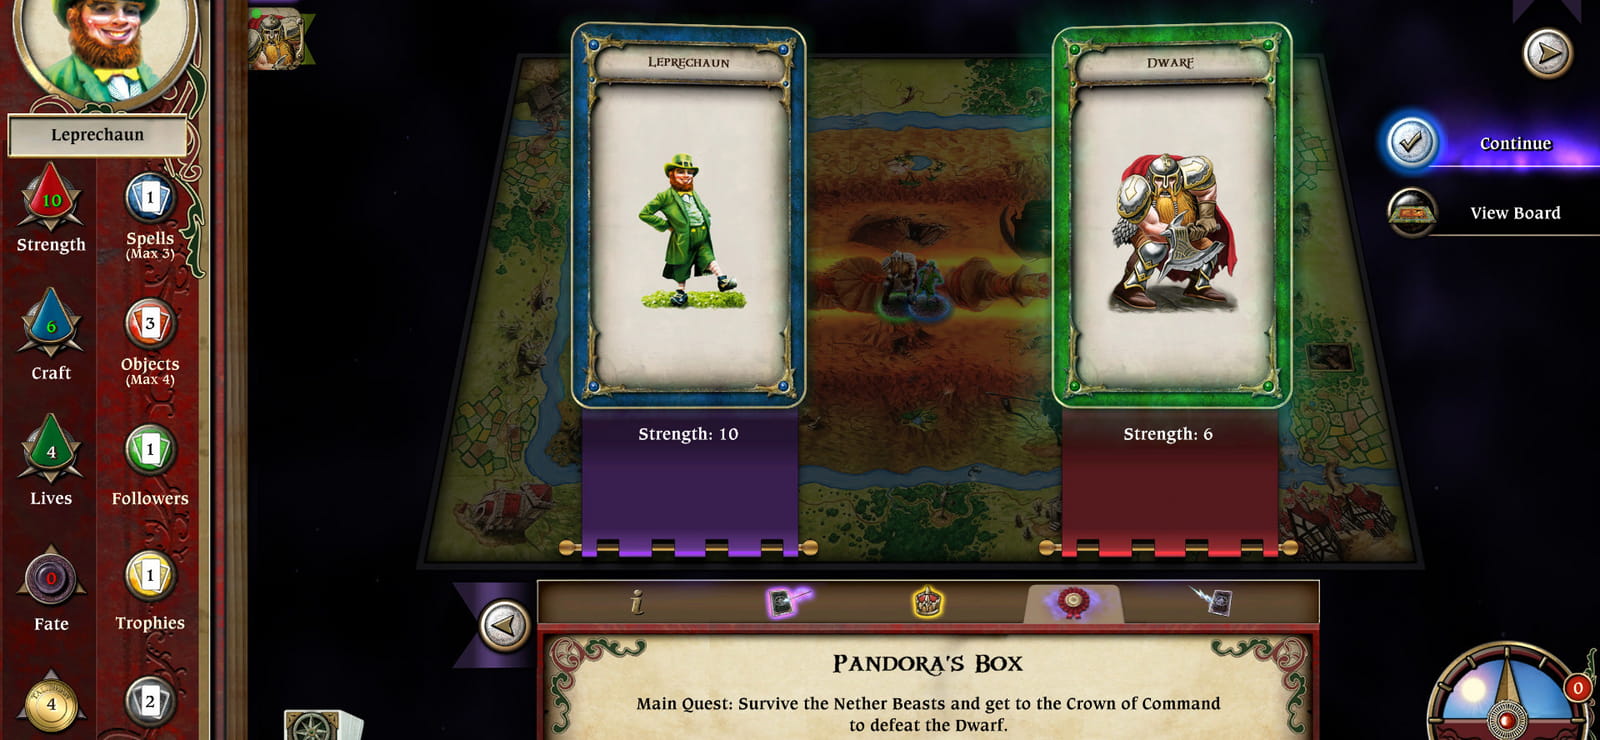 Talisman: Origins - The Legend Of Pandora's Box